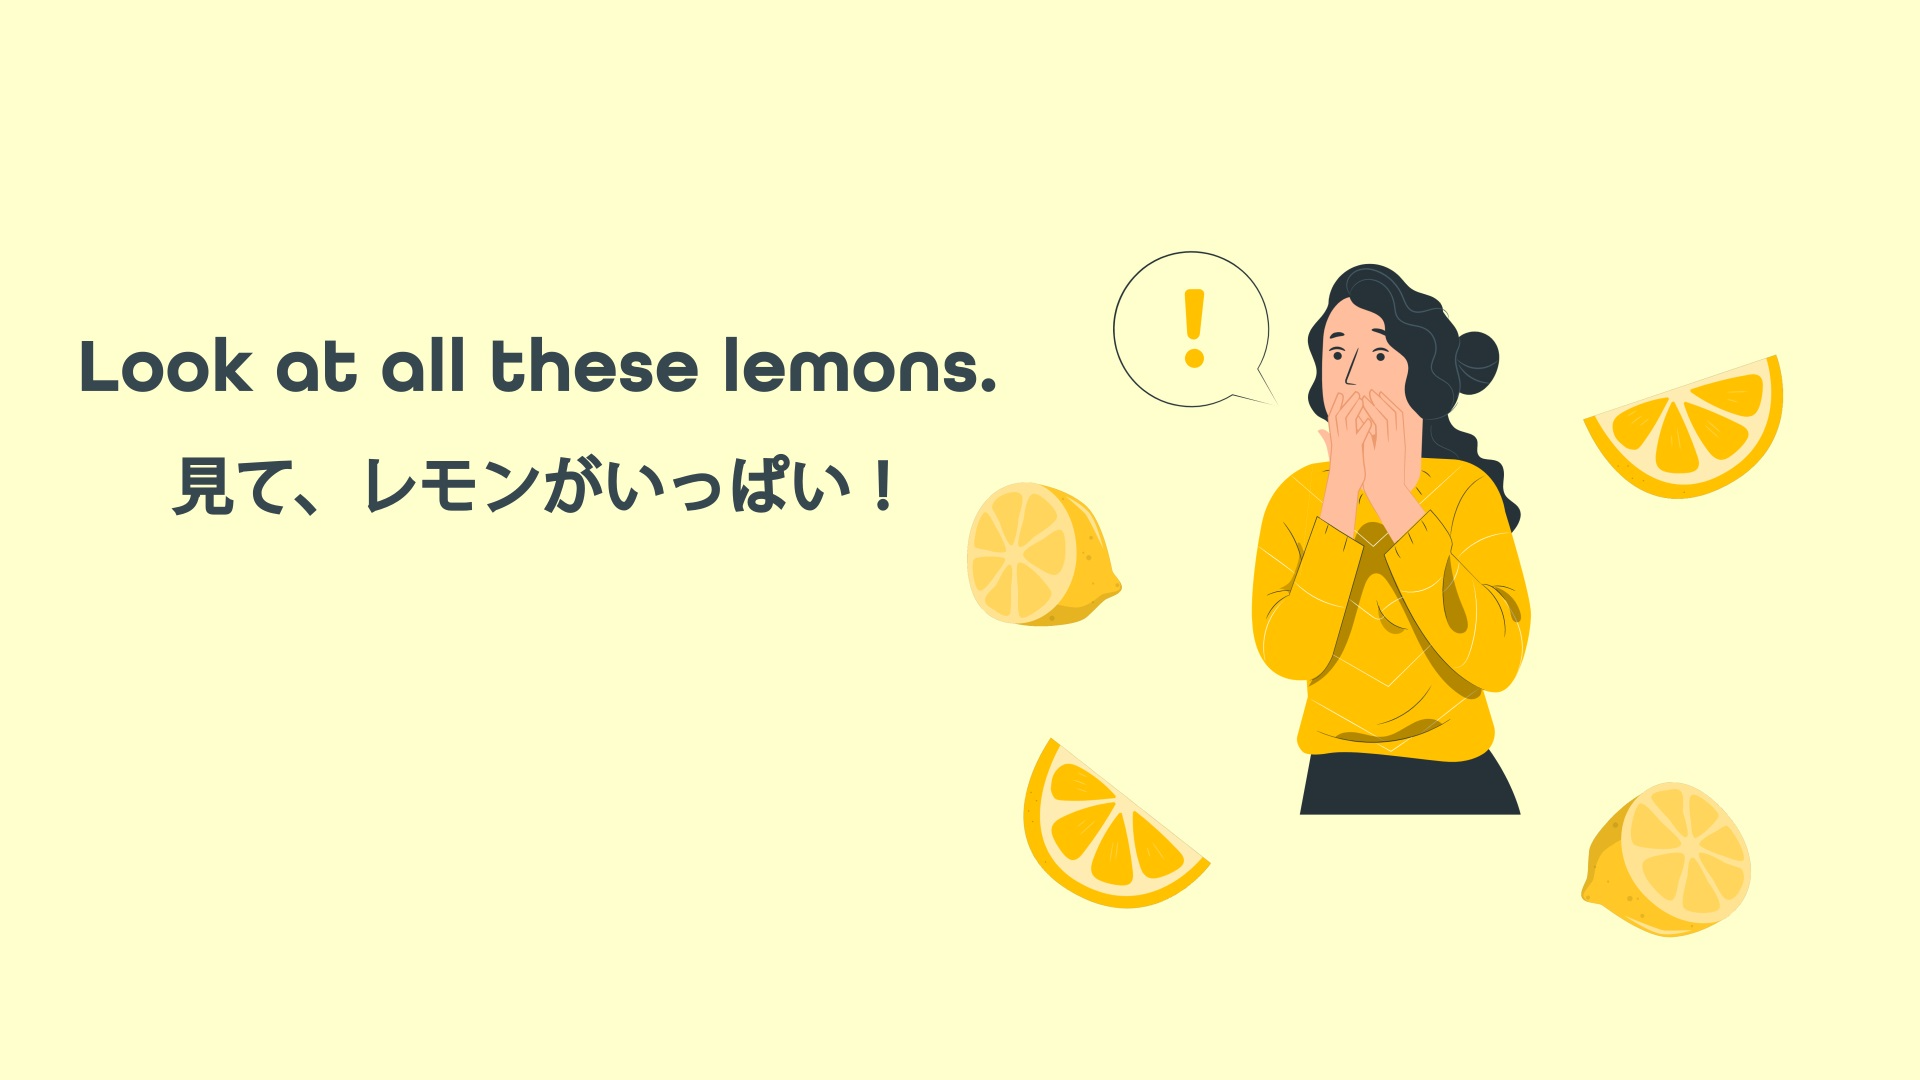 Look at all these lemons. 見て、レモンがいっぱい！